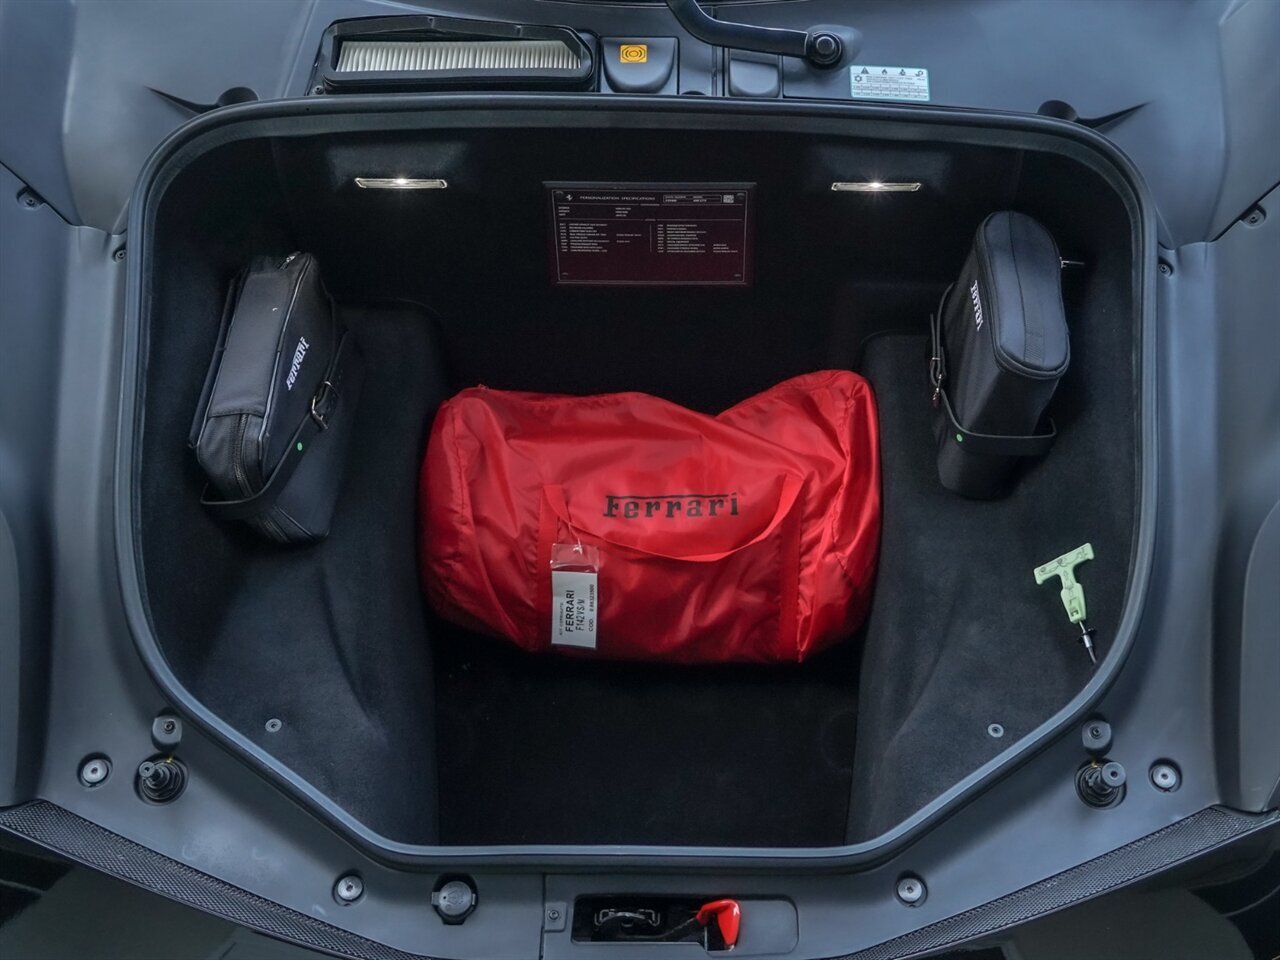 No Reserve: Three-Piece Ferrari 488 GTB Luggage Set for sale on BaT  Auctions - ending November 7 (Lot #126,641)